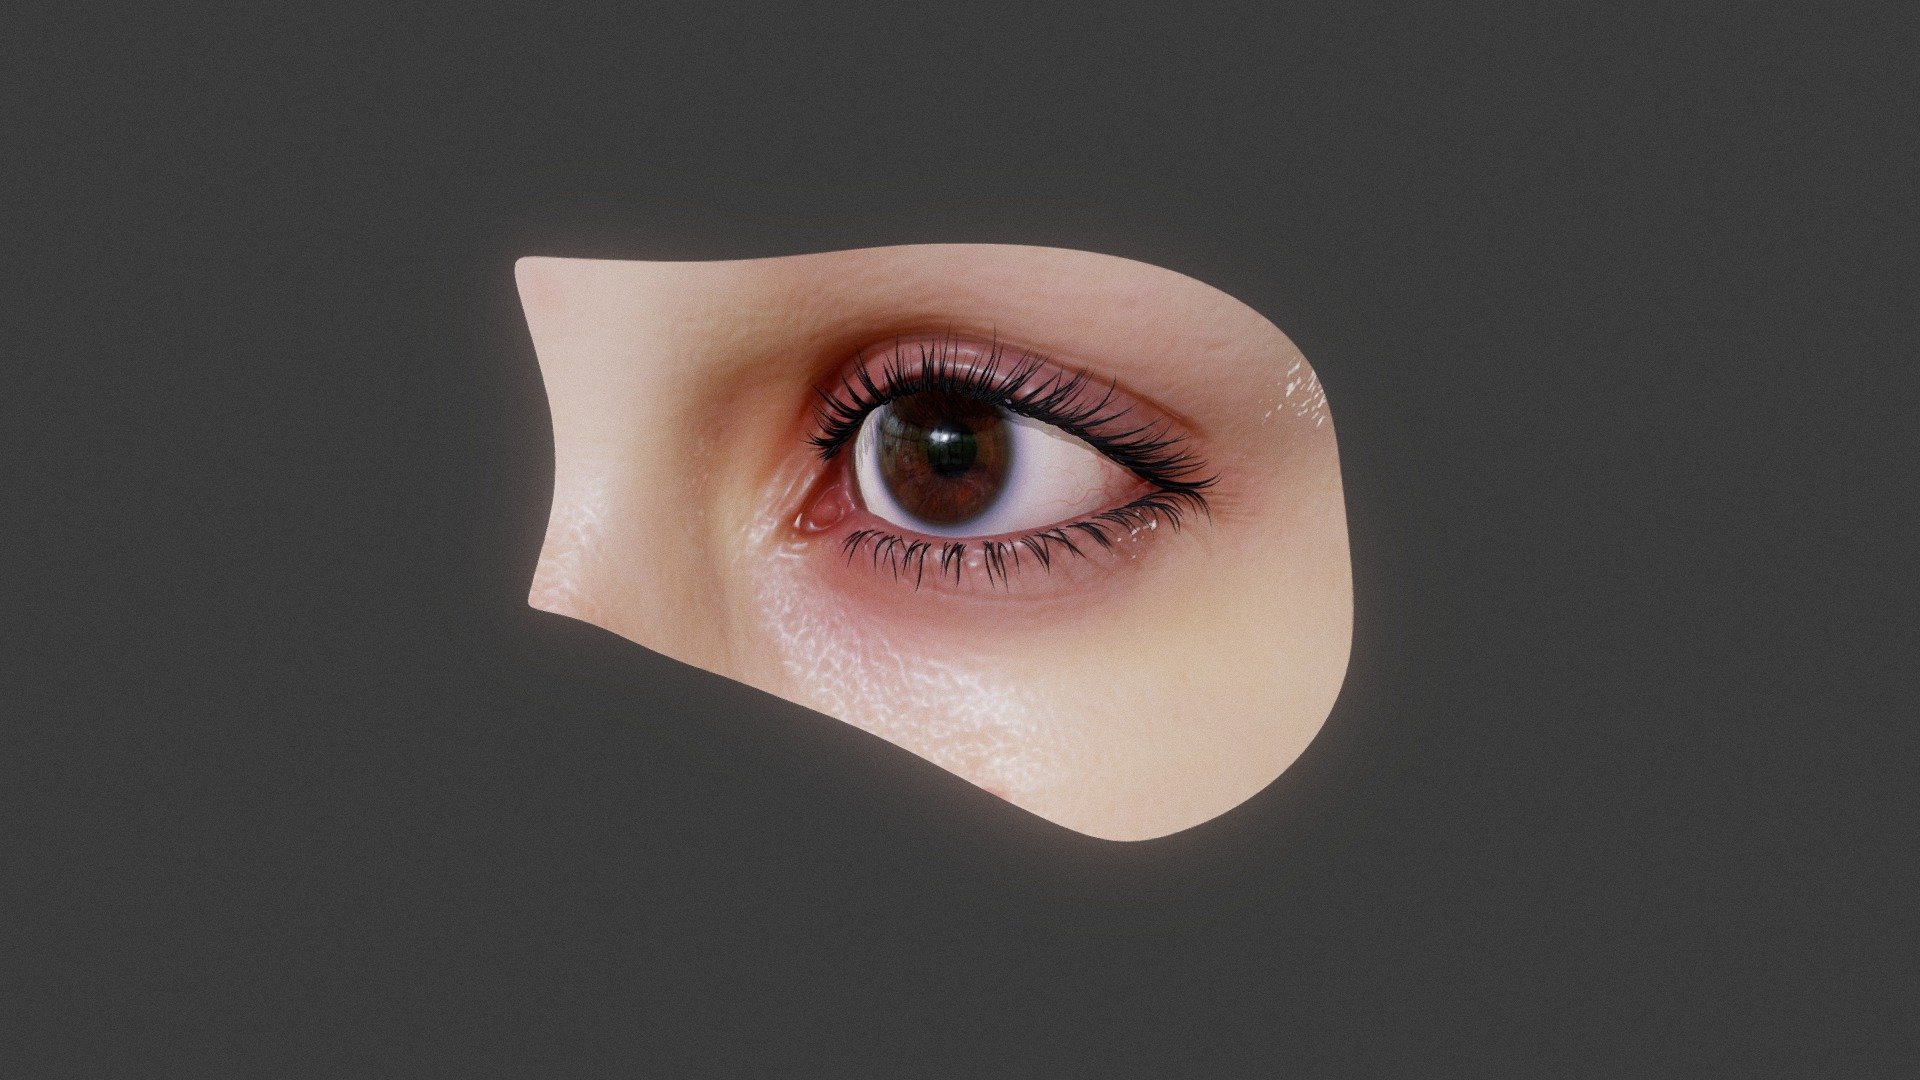 Realistic human eye made in Blender 2.90 - Eye (2021) - 3D model by Jim Morren (@journeyman) 3d model